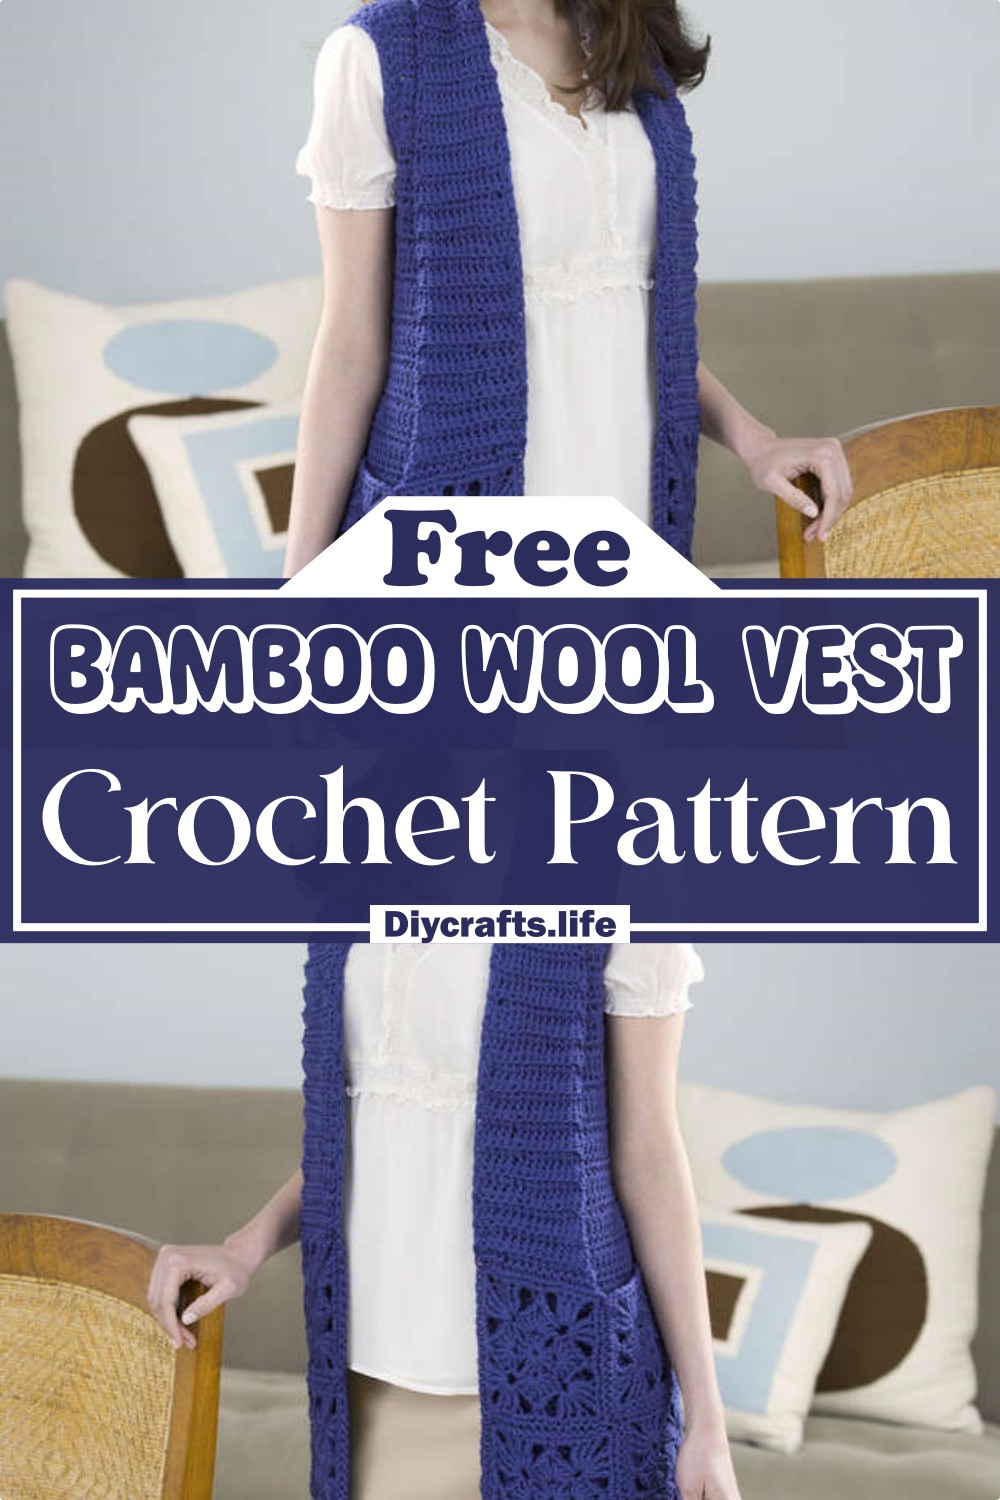 Bamboo Wool Vest